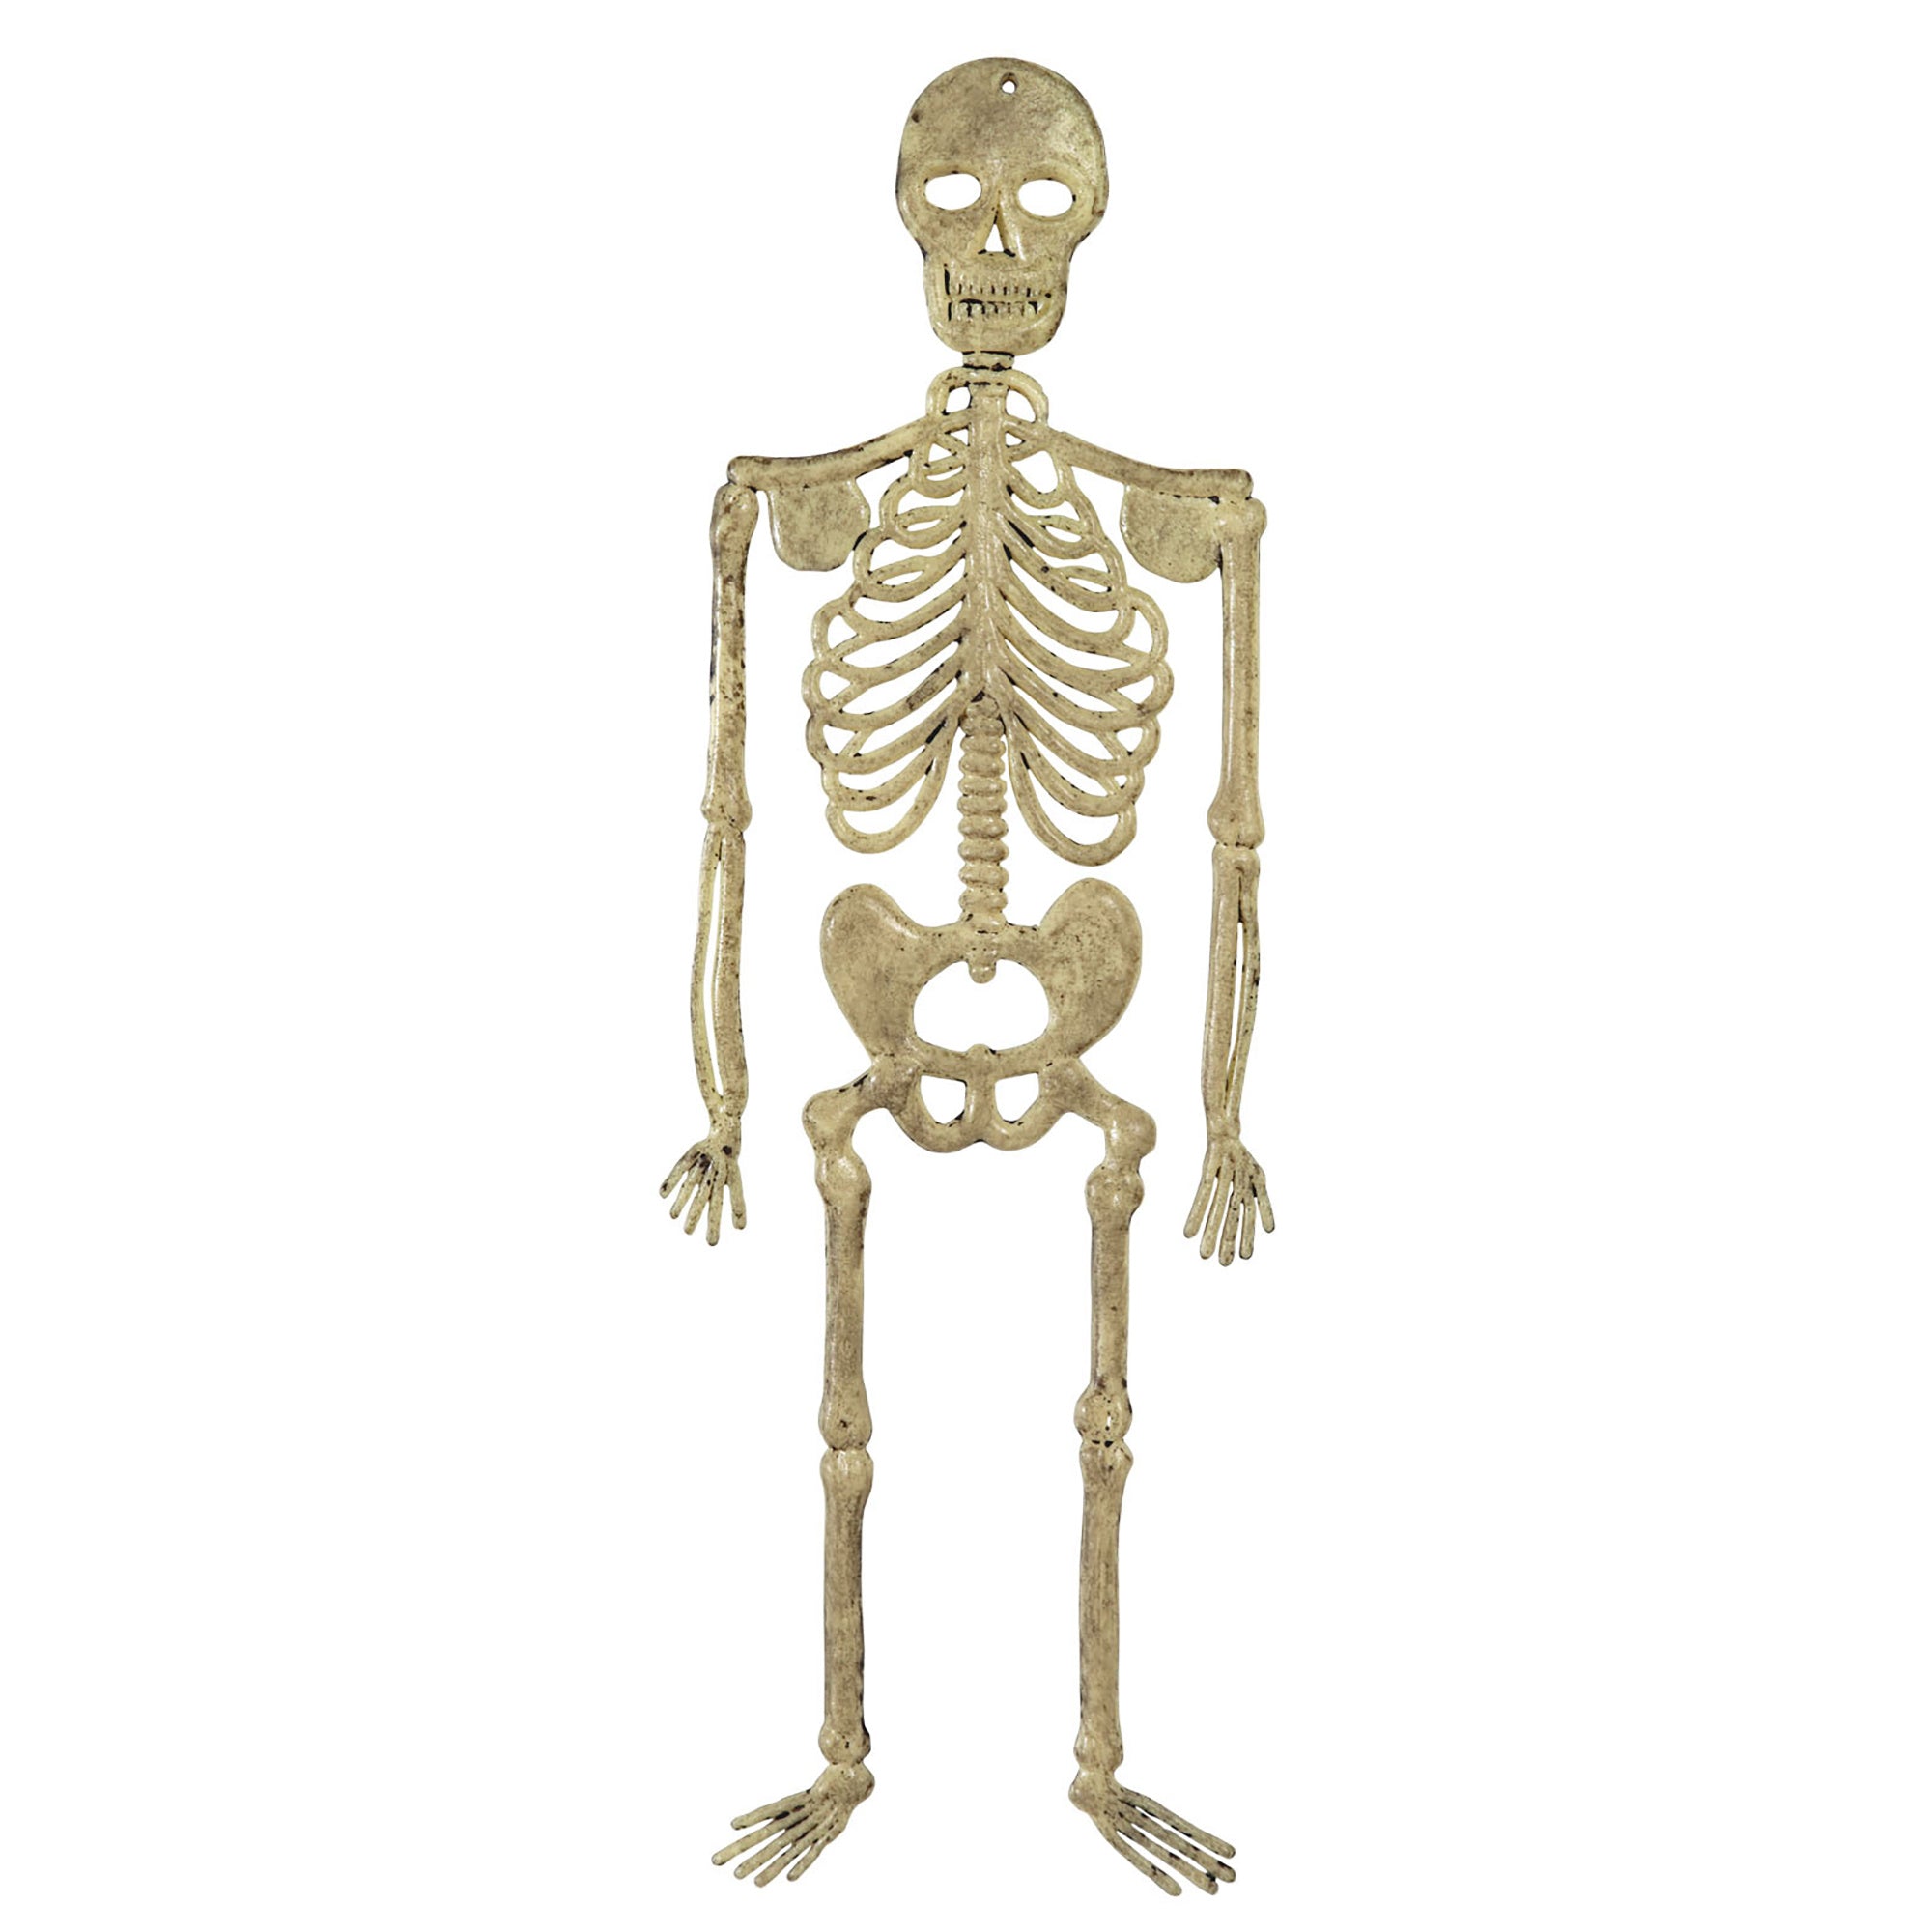 Feestwinkel: Benny het skelet